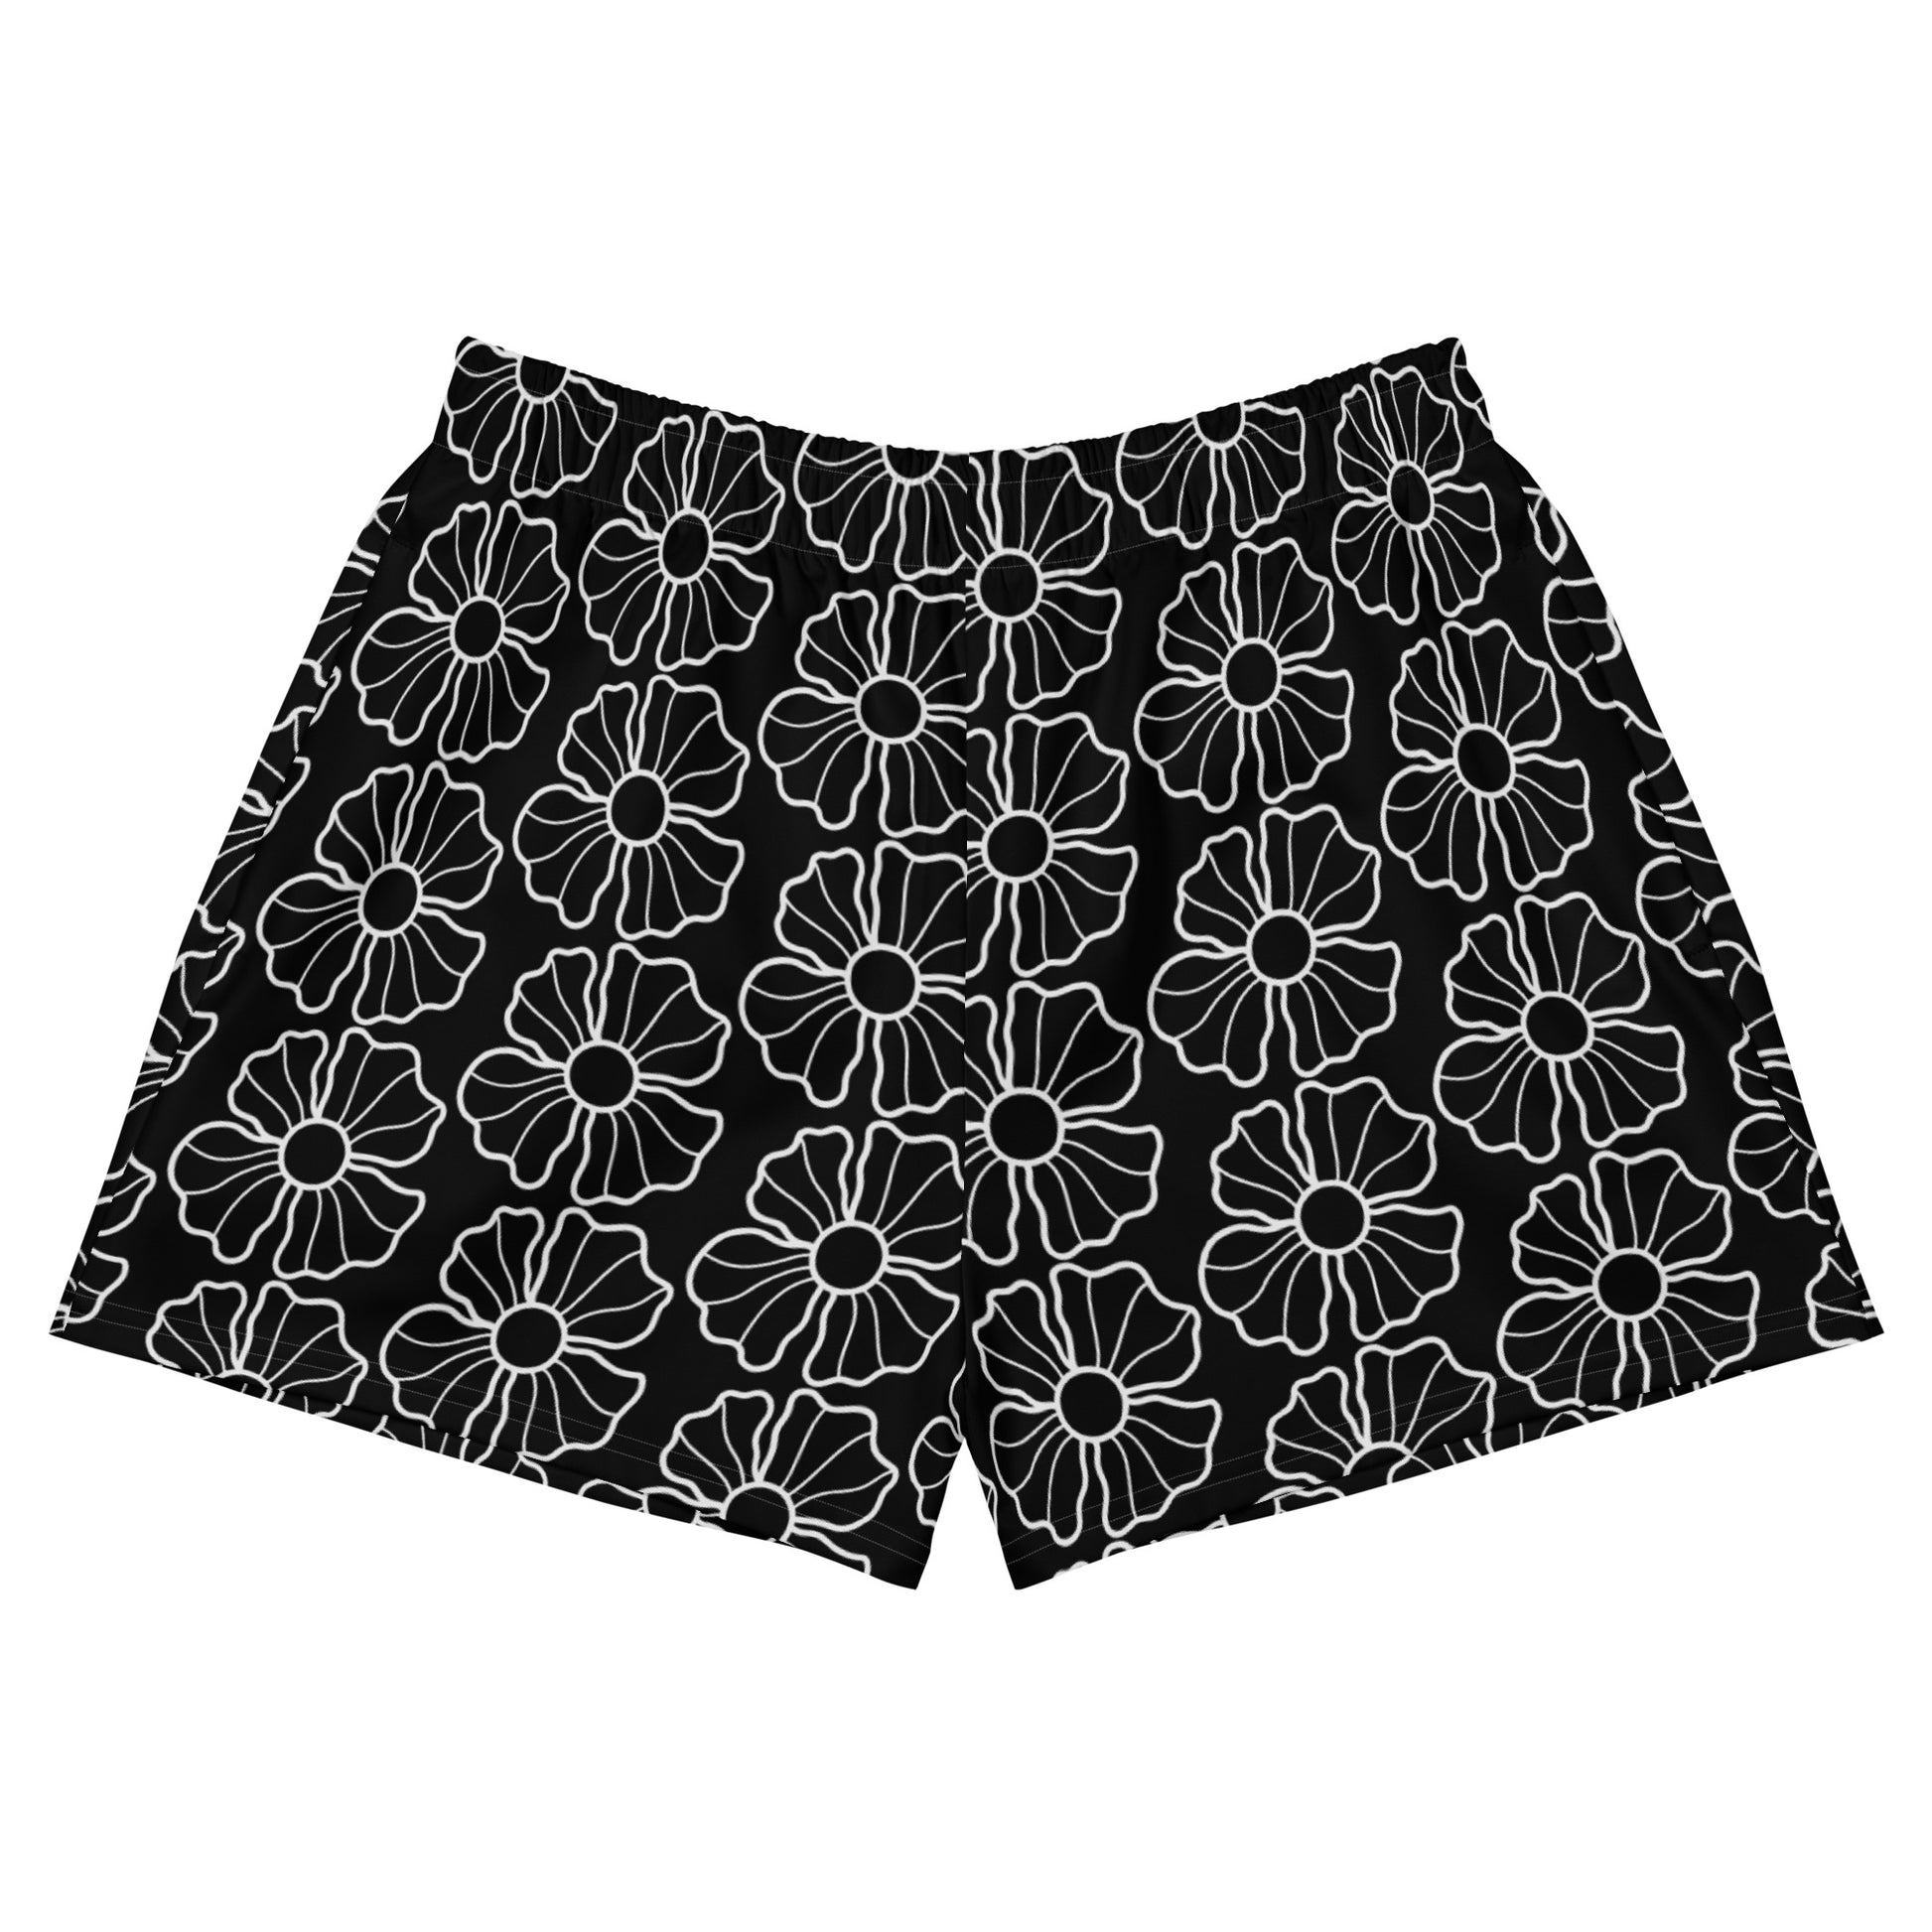 Patterned Shorts - Black/floral - Ladies